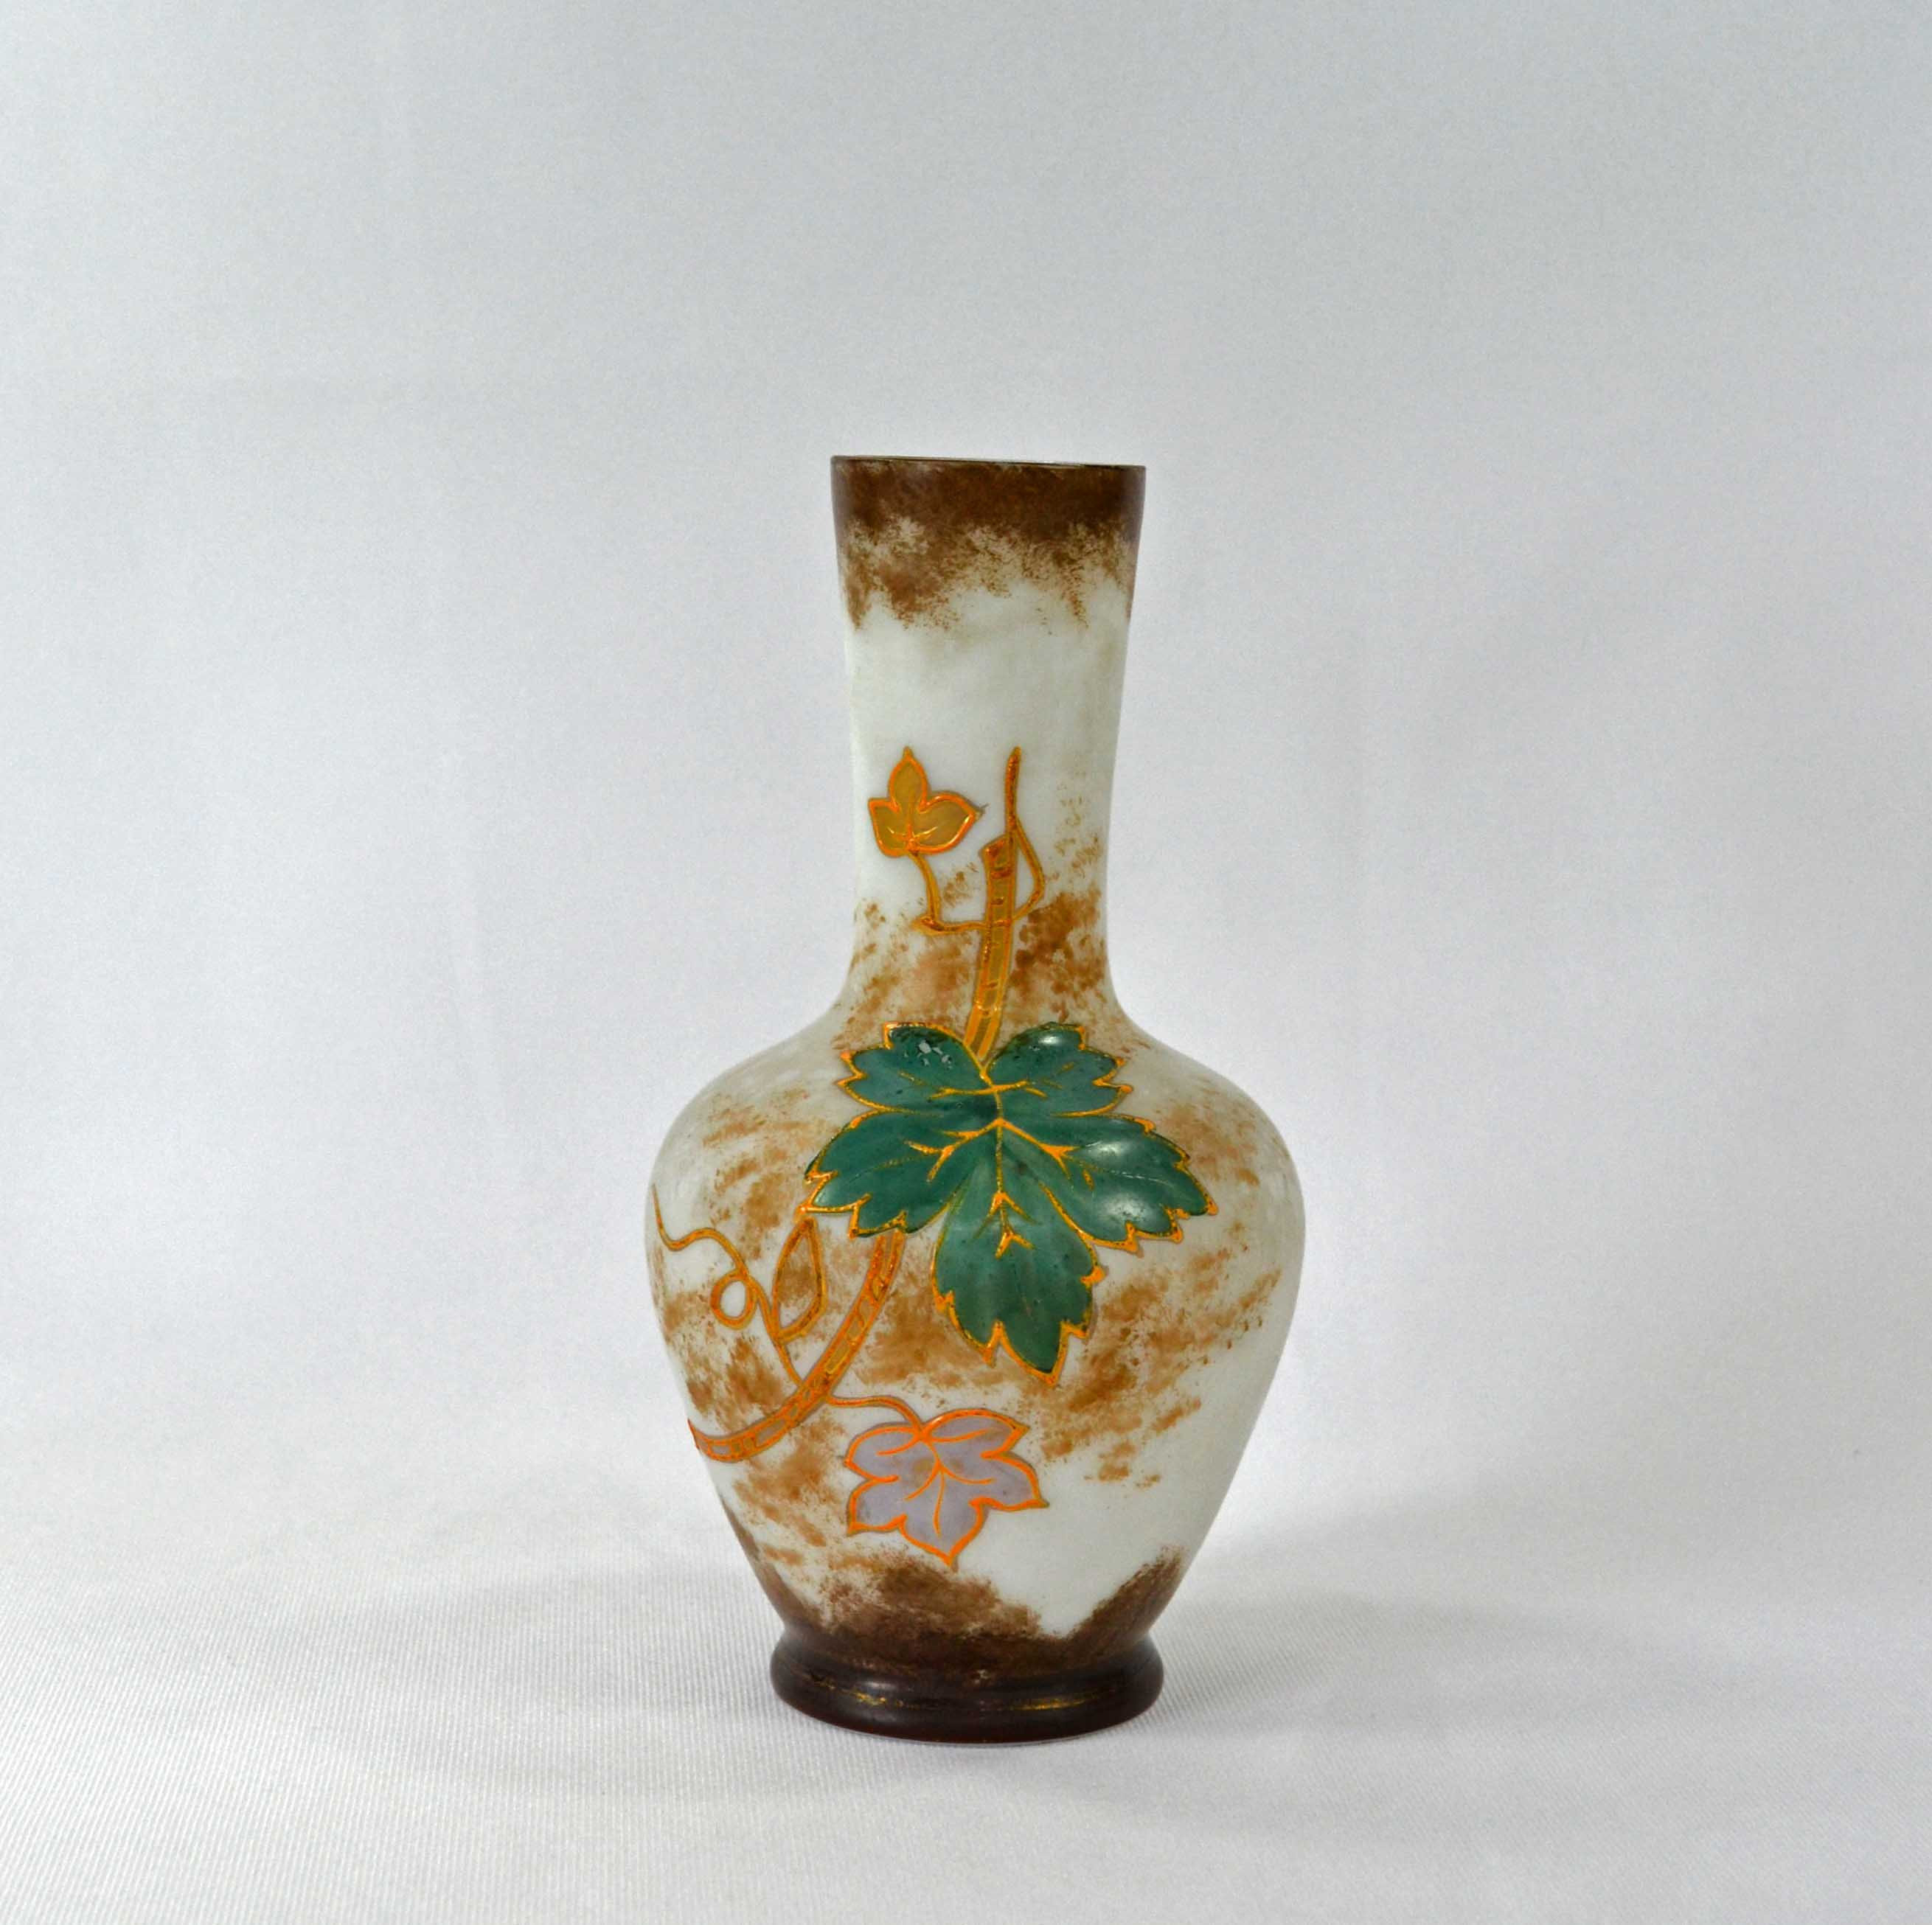 15 attractive Vintage Milk Glass Vase 2022 free download vintage milk glass vase of hand painted leaf vase vintage milk glass vase with grape etsy with regard to dc29fc294c28ezoom